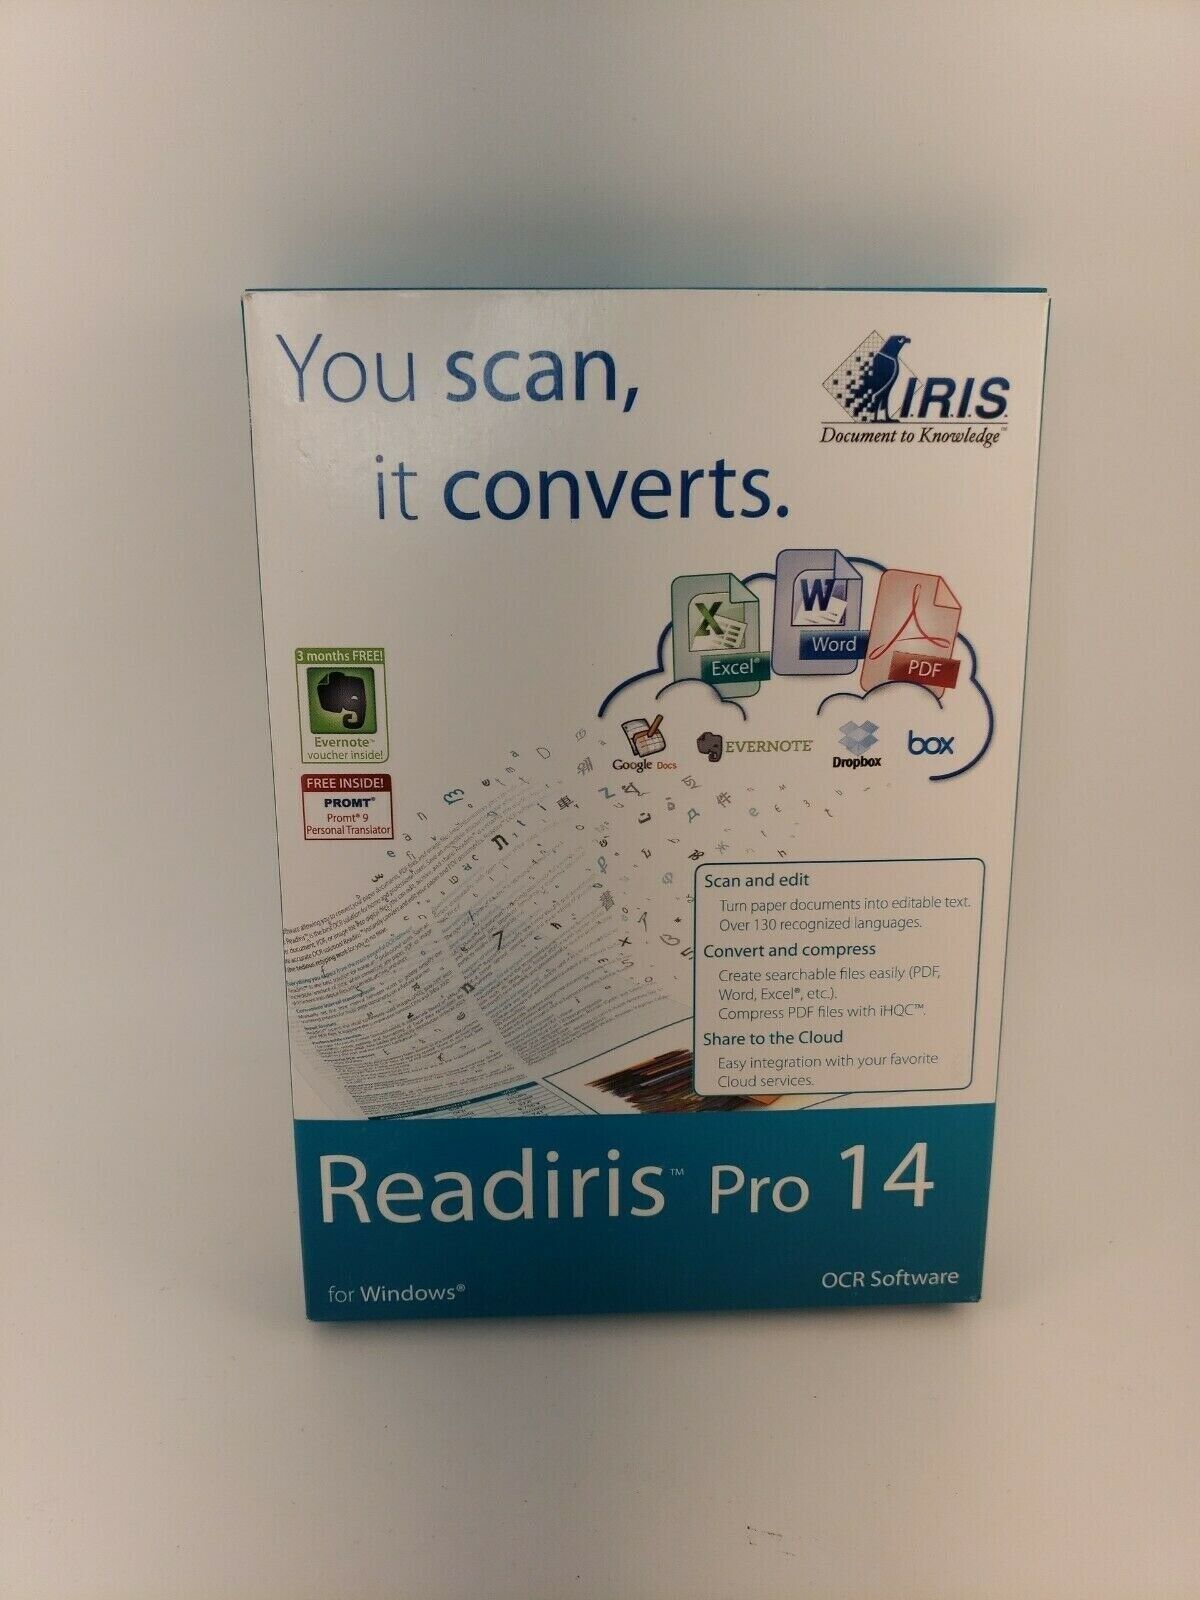 Primary image for IRIS Readiris Pro 14 OCR Software for Windows